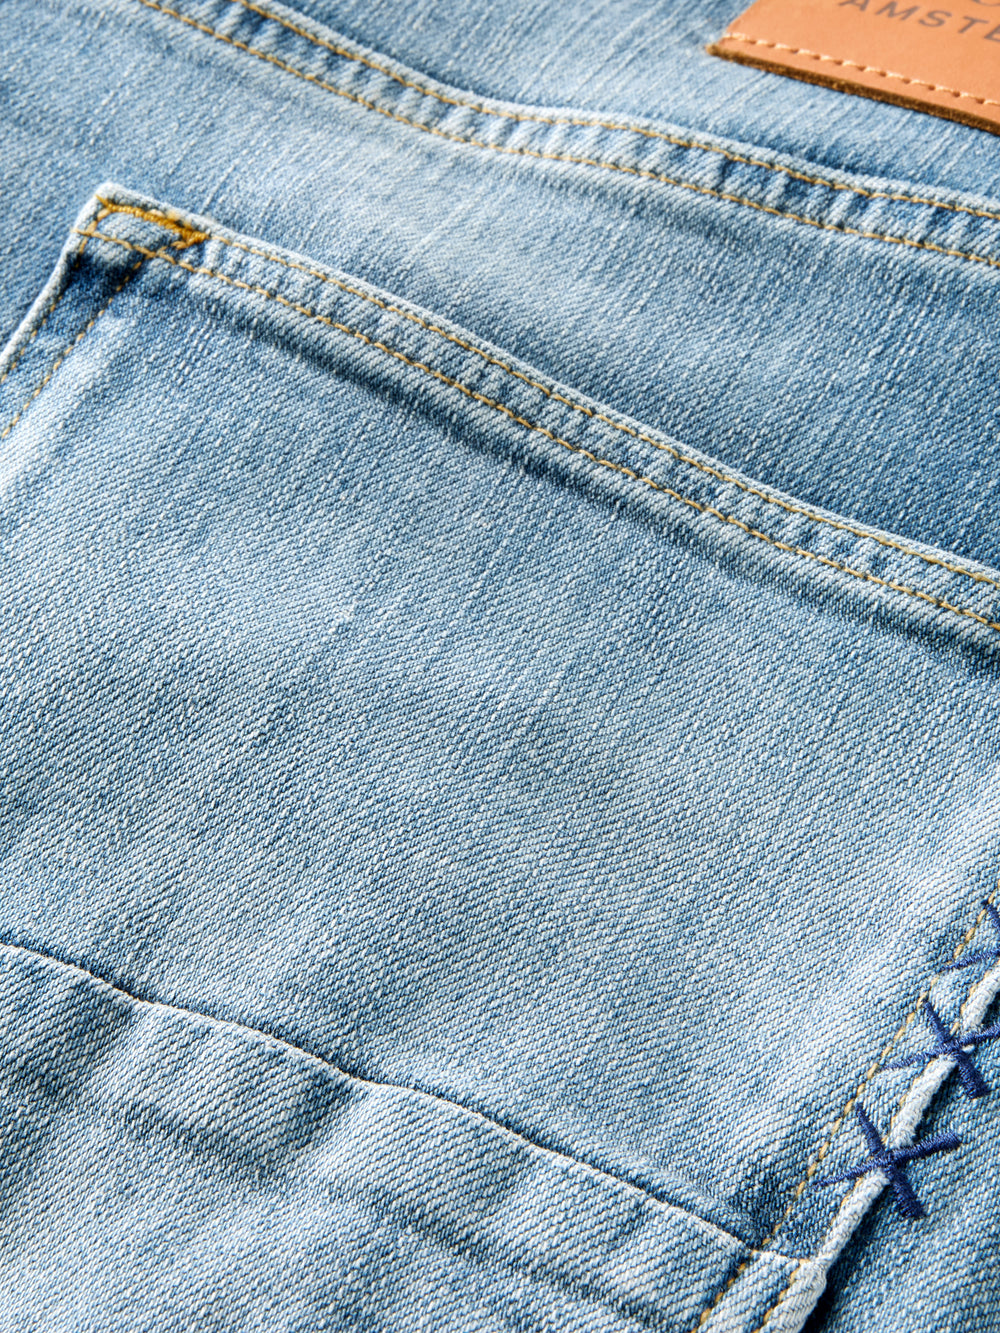 Ralston regular slim fit jeans - Aqua Blue - Scotch & Soda AU